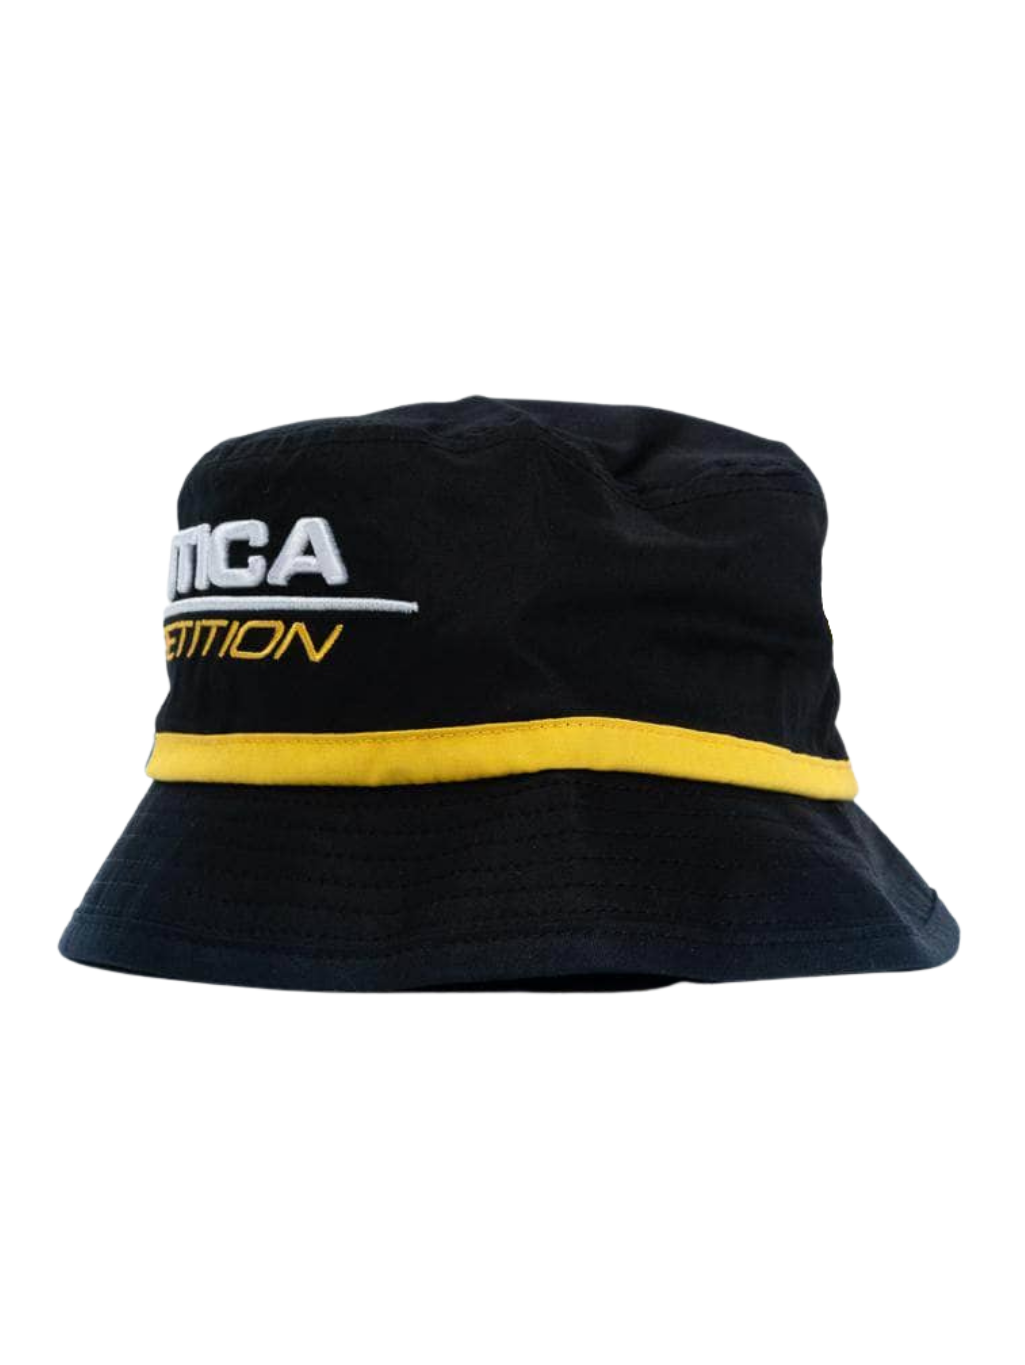 Nautica Competition Bucket Hat